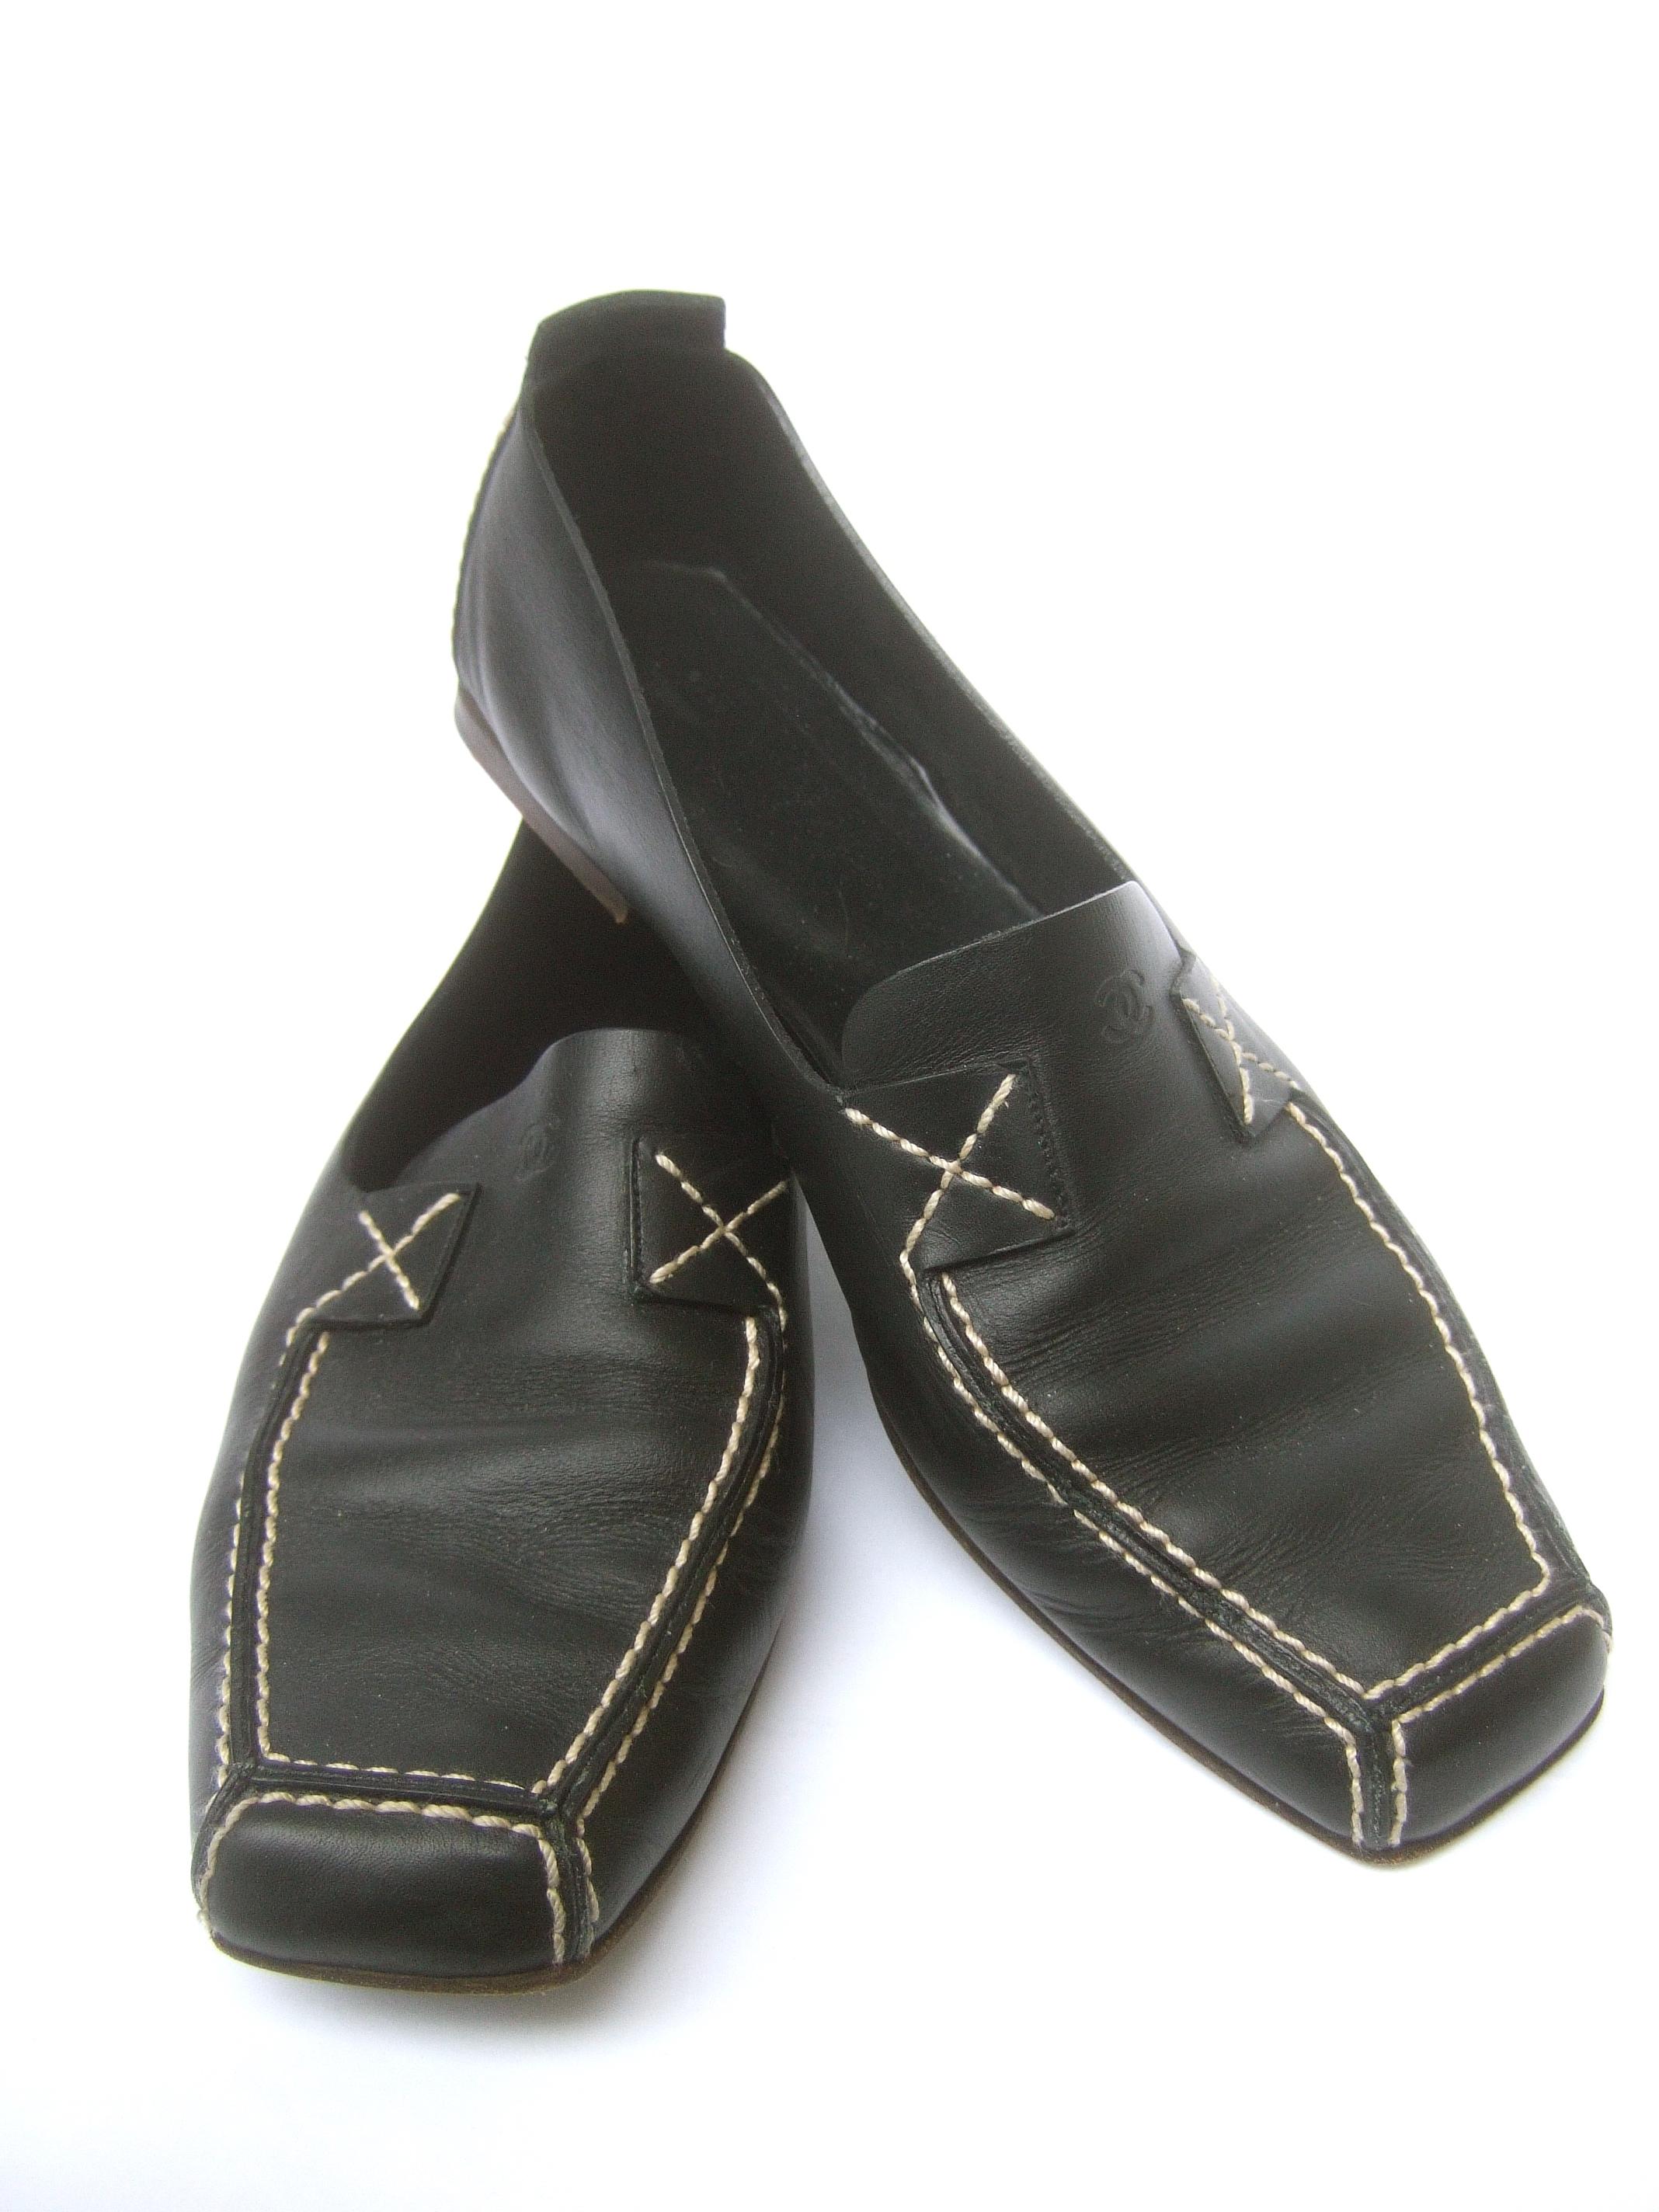 Chanel Black Leather Slip On Italian Low Heel Flats Size 38.5 c 1990s 3